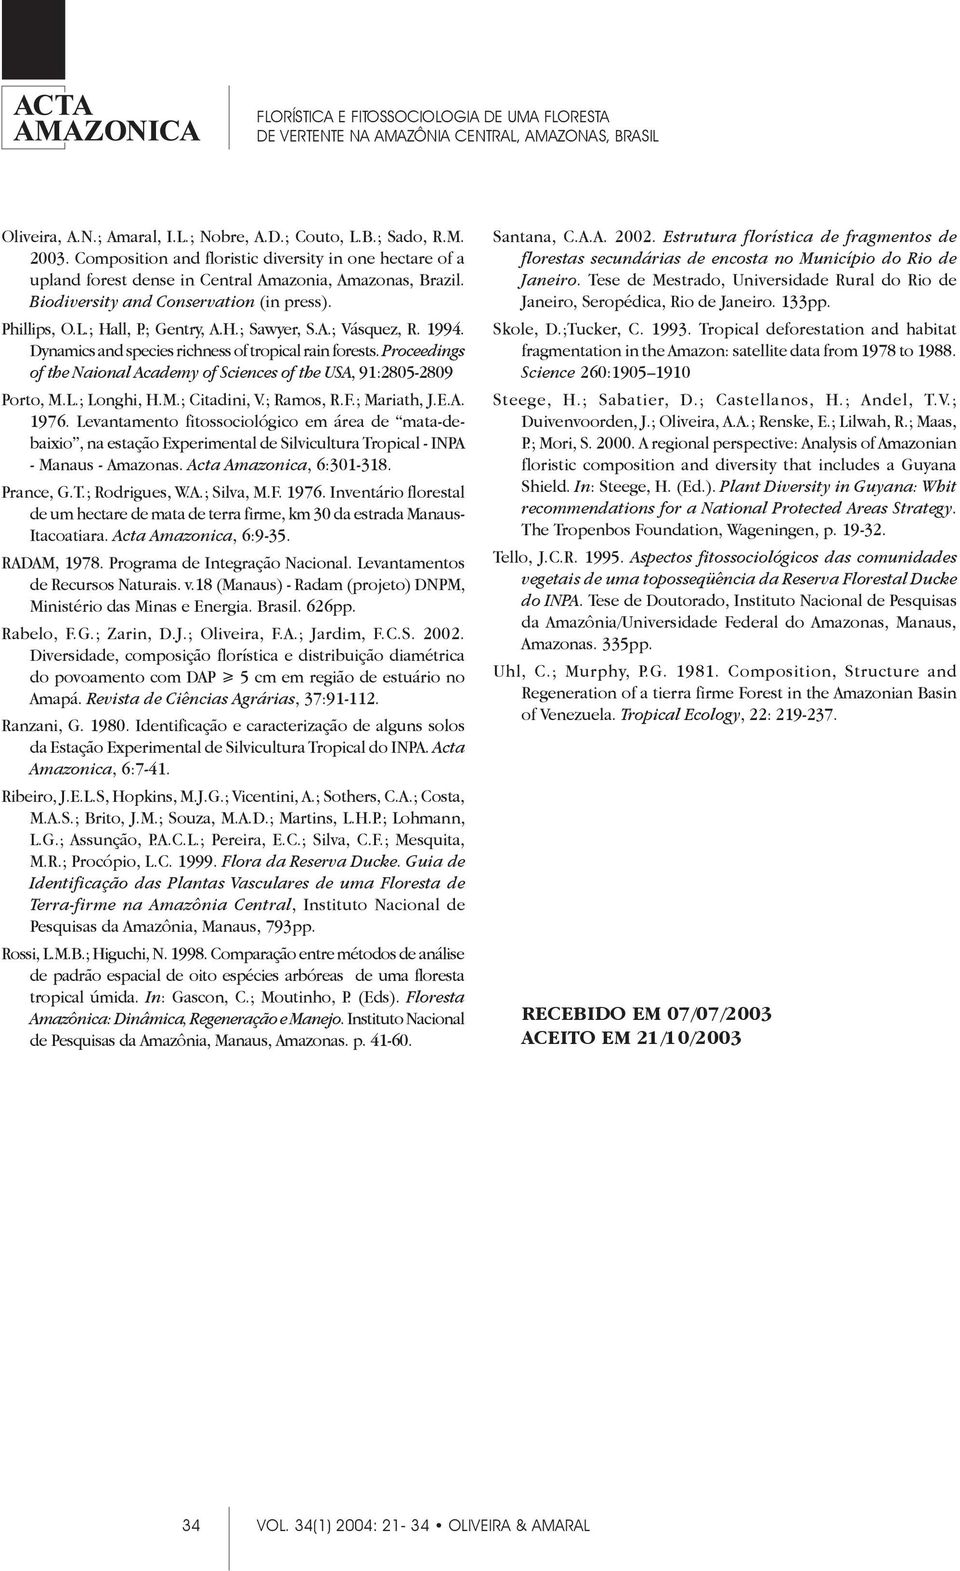 Proceedings of the Naional Academy of Sciences of the USA, 91:2805-2809 Porto, M.L.; Longhi, H.M.; Citadini, V.; Ramos, R.F.; Mariath, J.E.A. 1976.